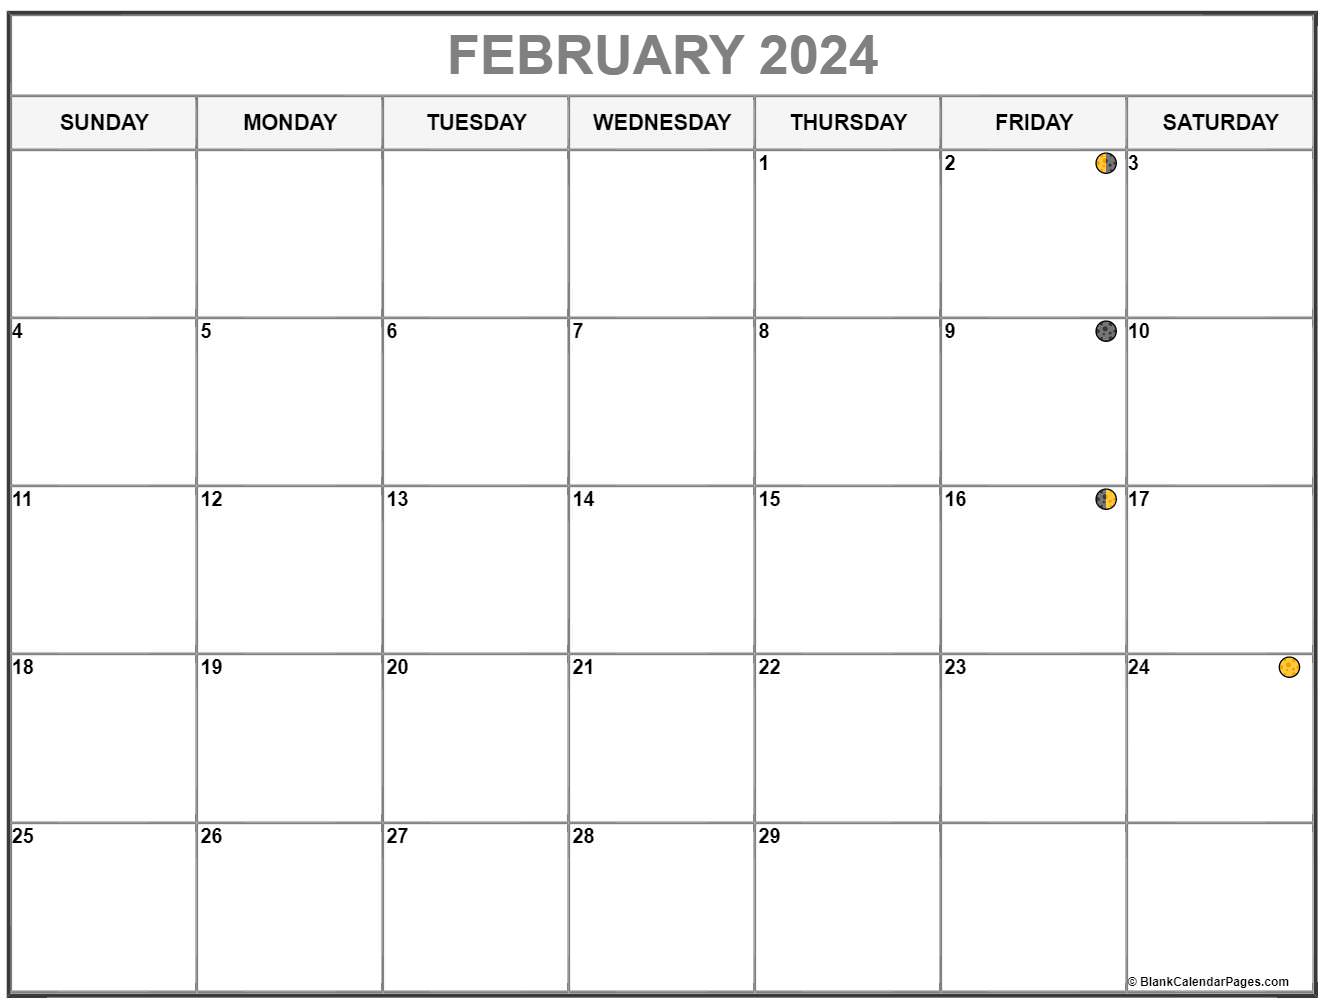 February Lunar Calendar 2022 February 2022 Lunar Calendar | Moon Phase Calendar